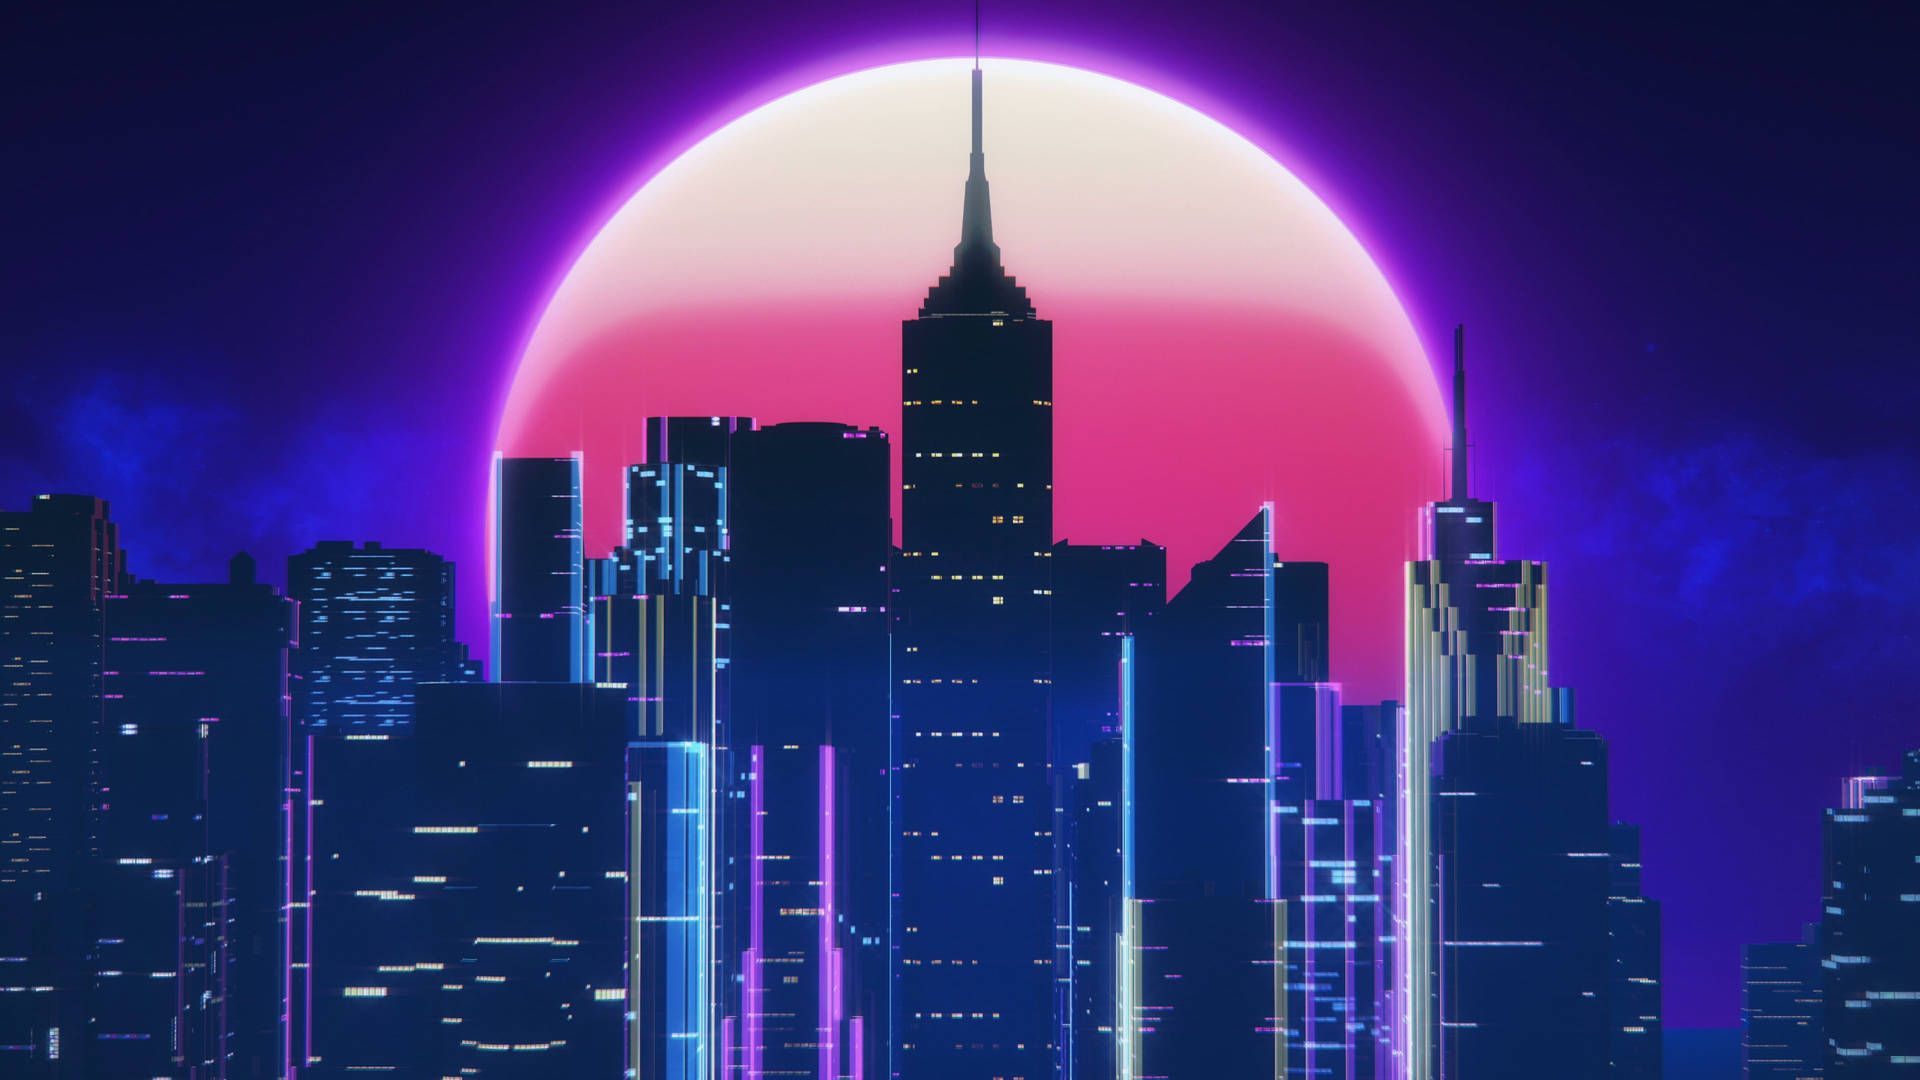 Download Neon Aesthetic City Night View Wallpaper